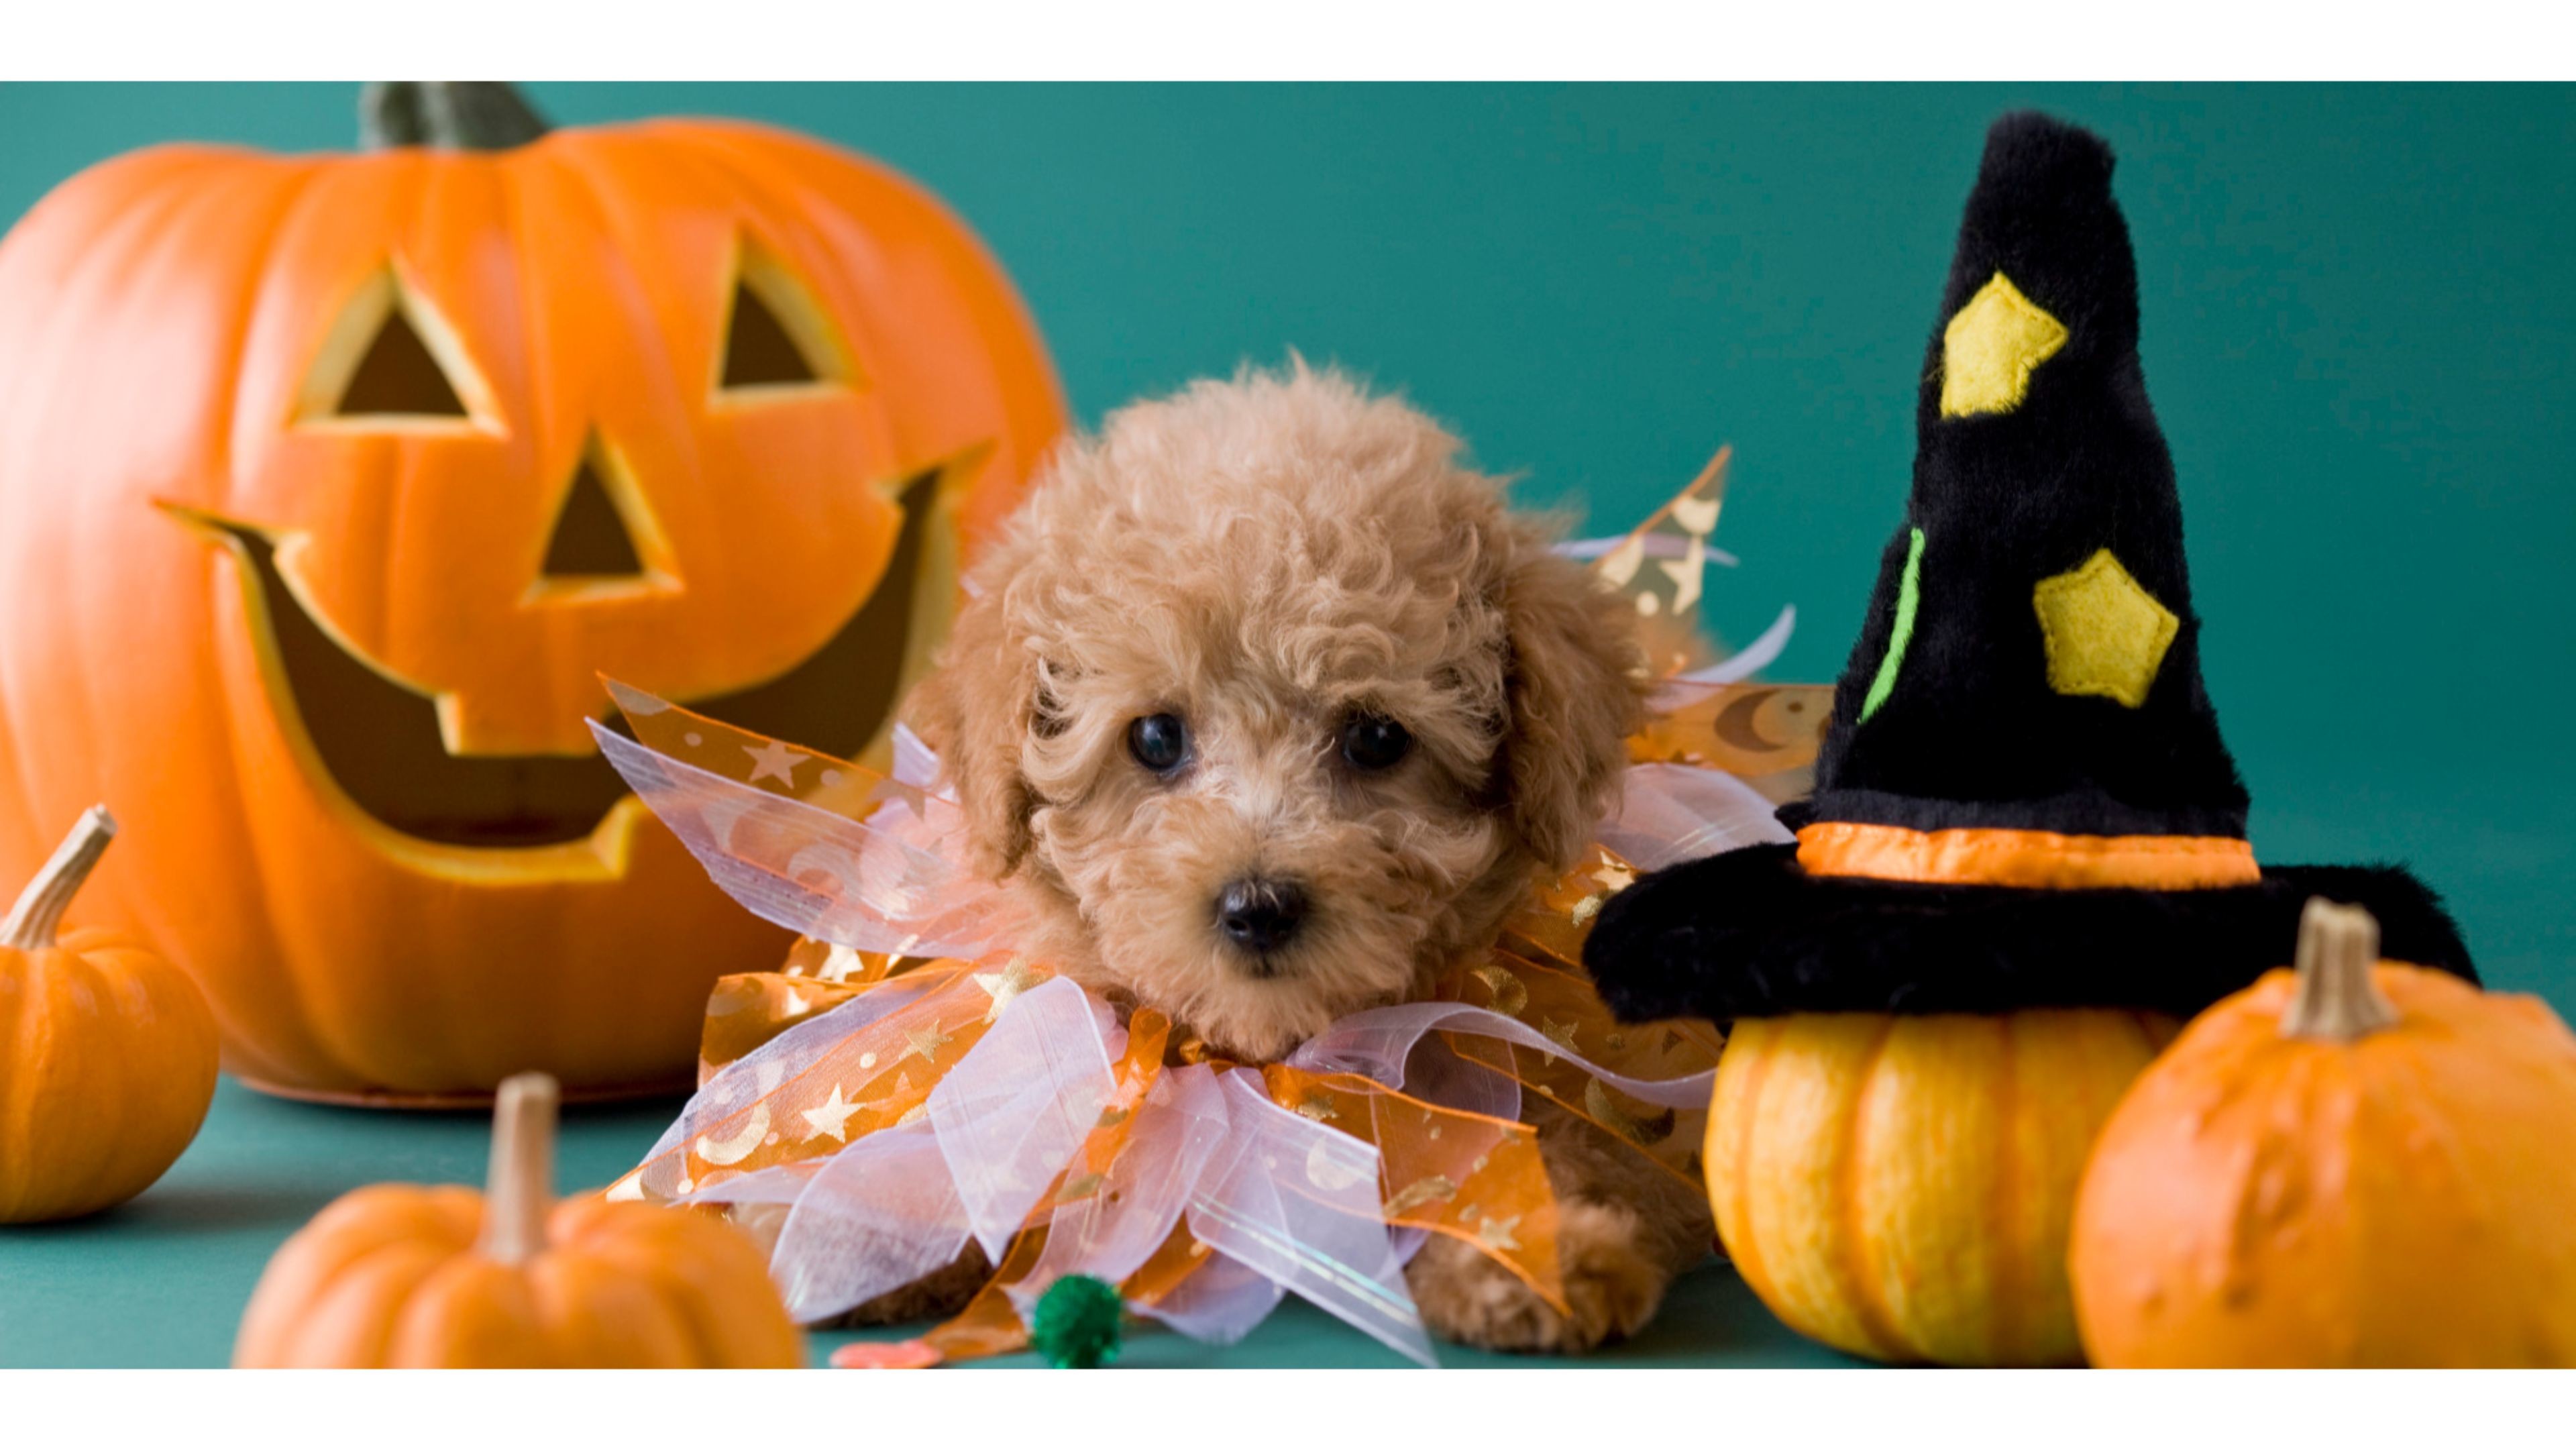 3840x2160 Pets Halloween Wallpaper Images - Reverse Search. Pets Halloween Wallpaper  Images Reverse Search